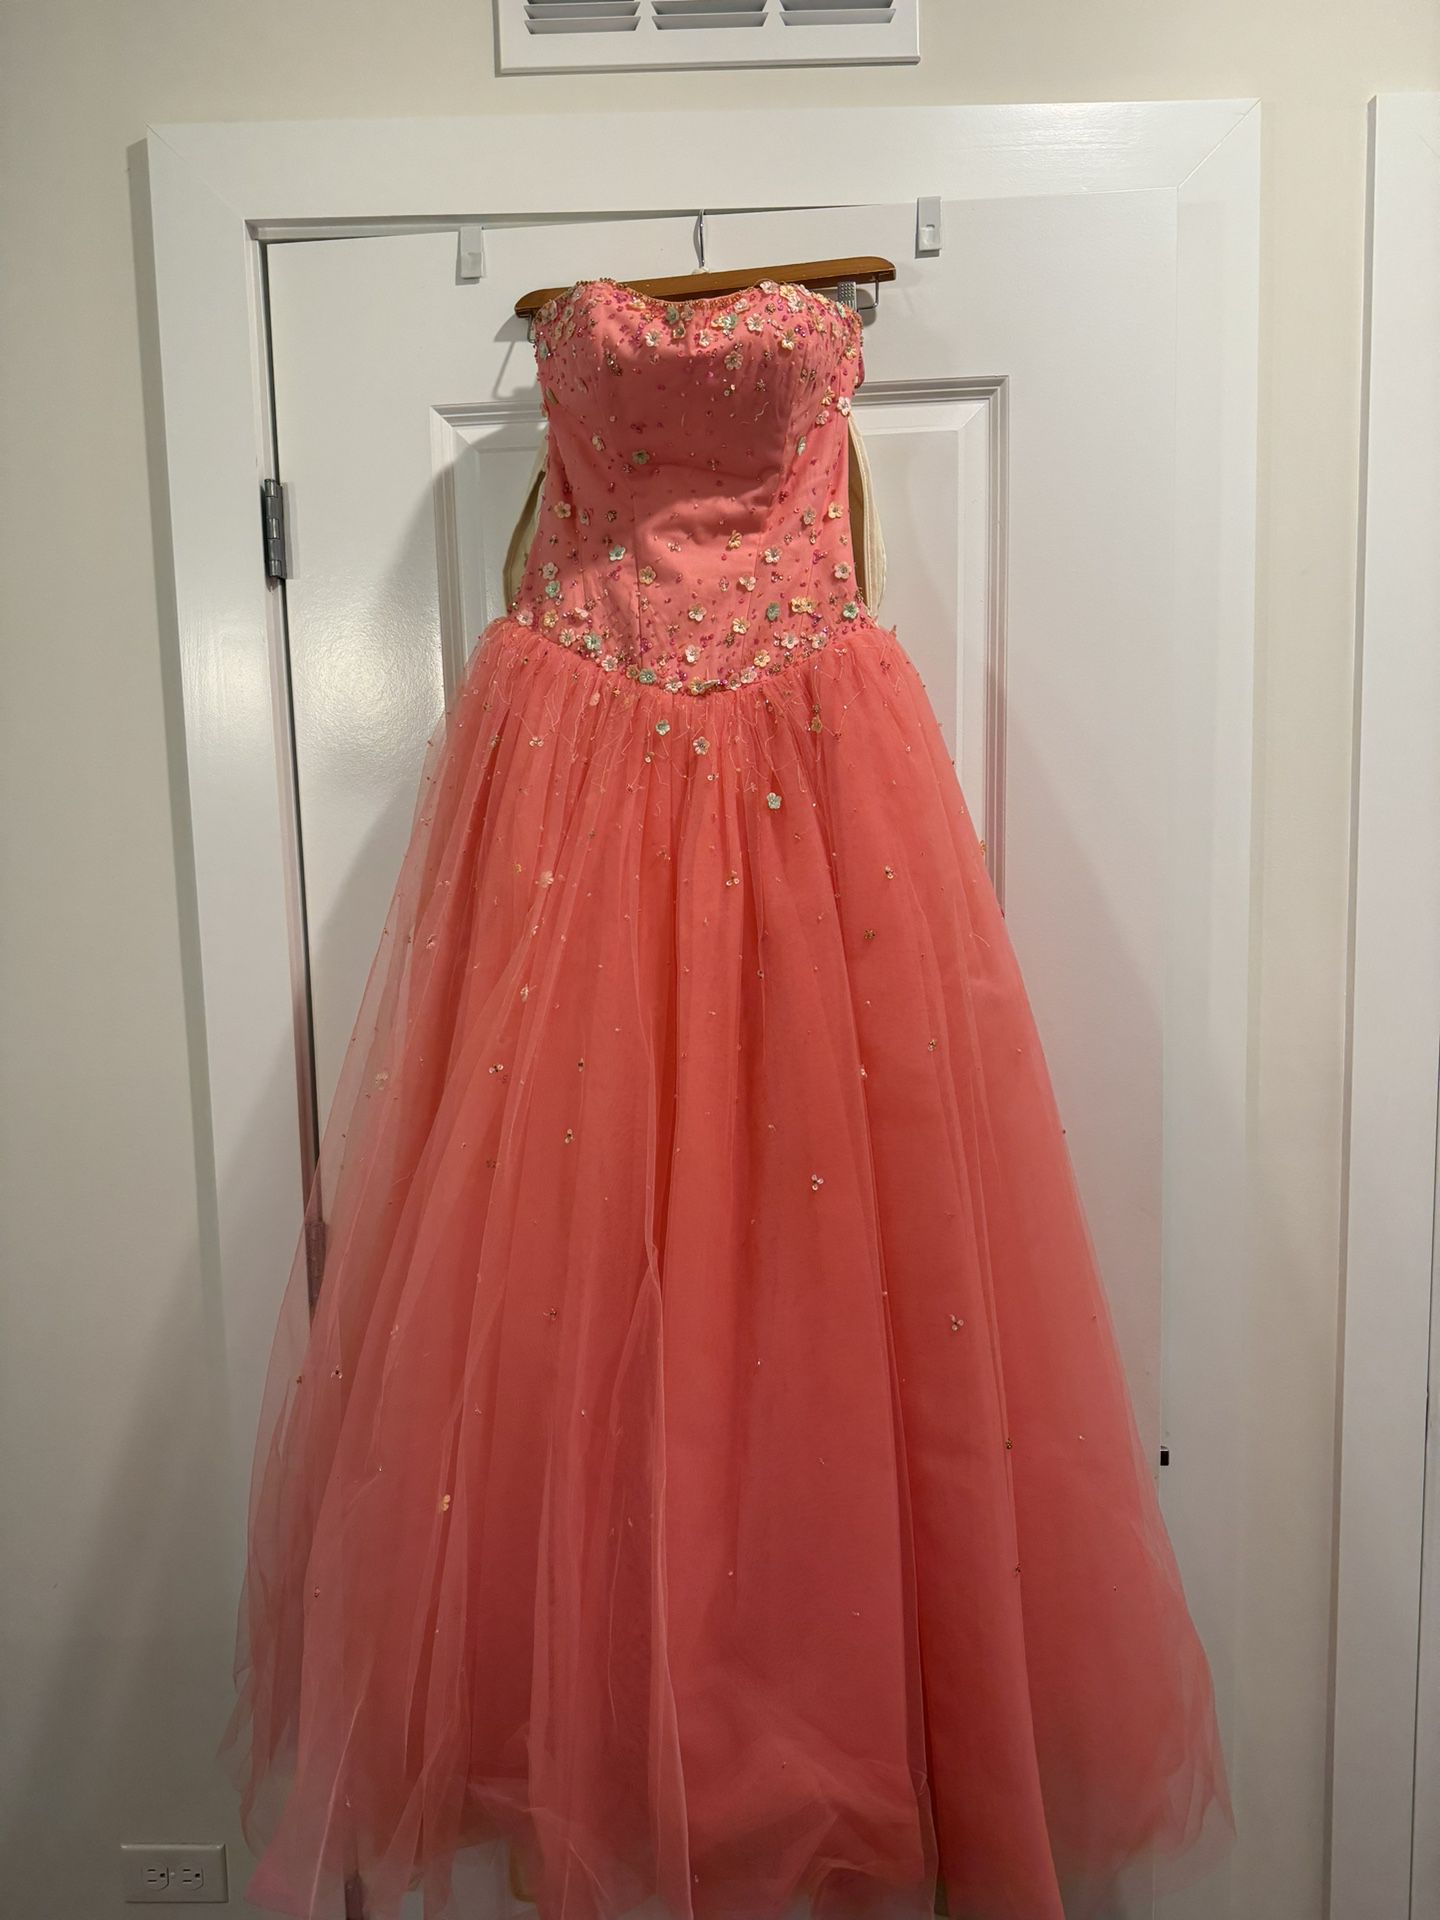 Princess Dress